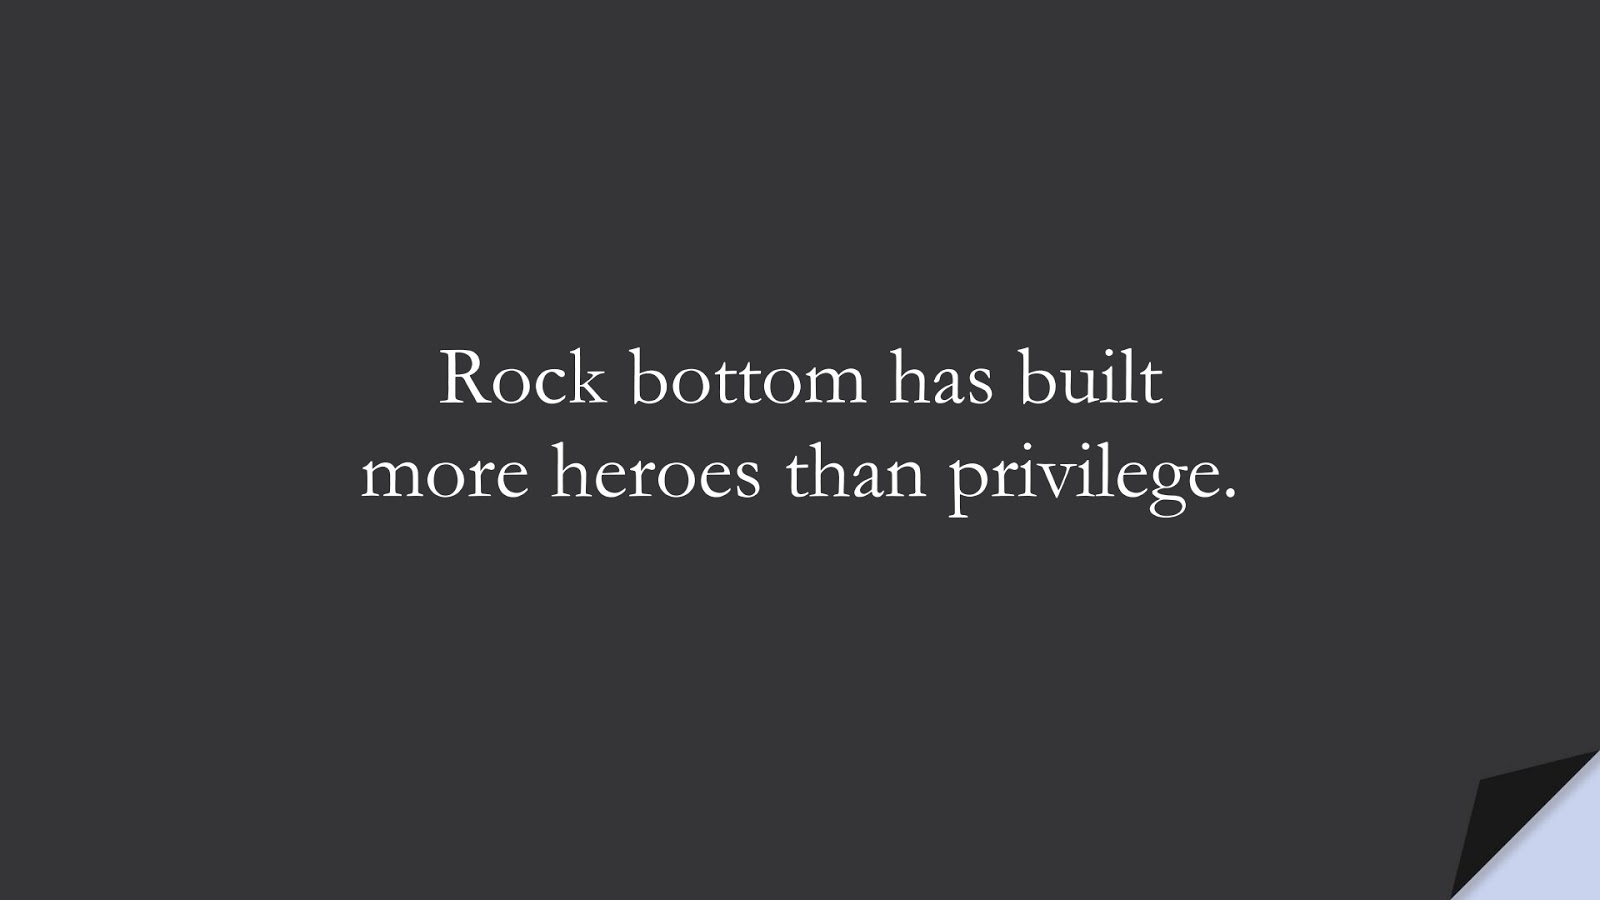 Rock bottom has built more heroes than privilege.FALSE